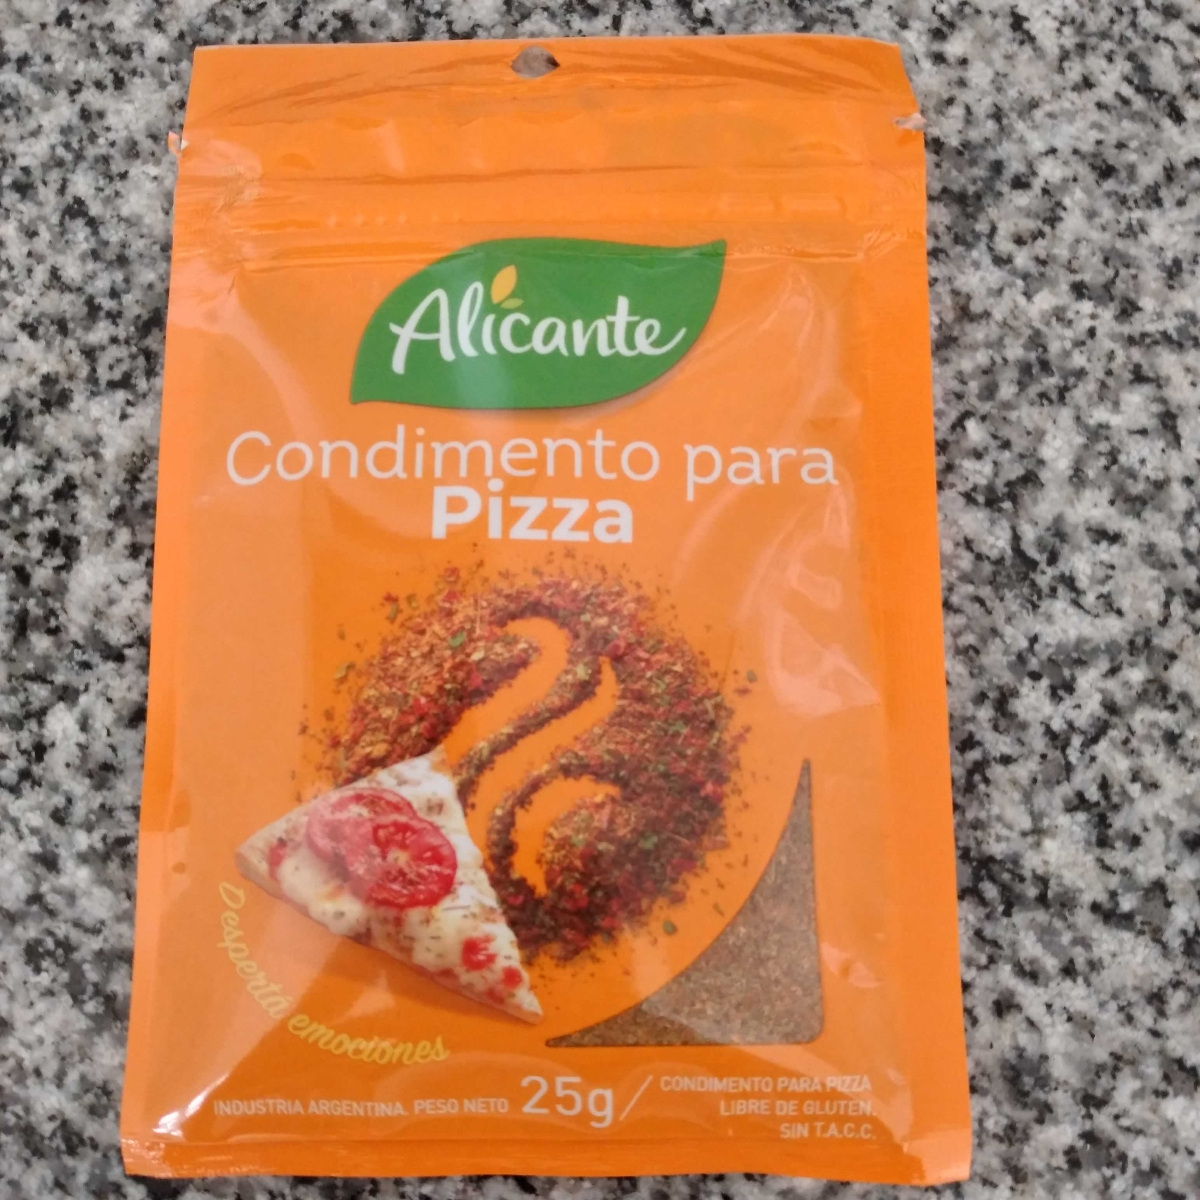 Alicante Condimento Para Pizza Reviews | abillion